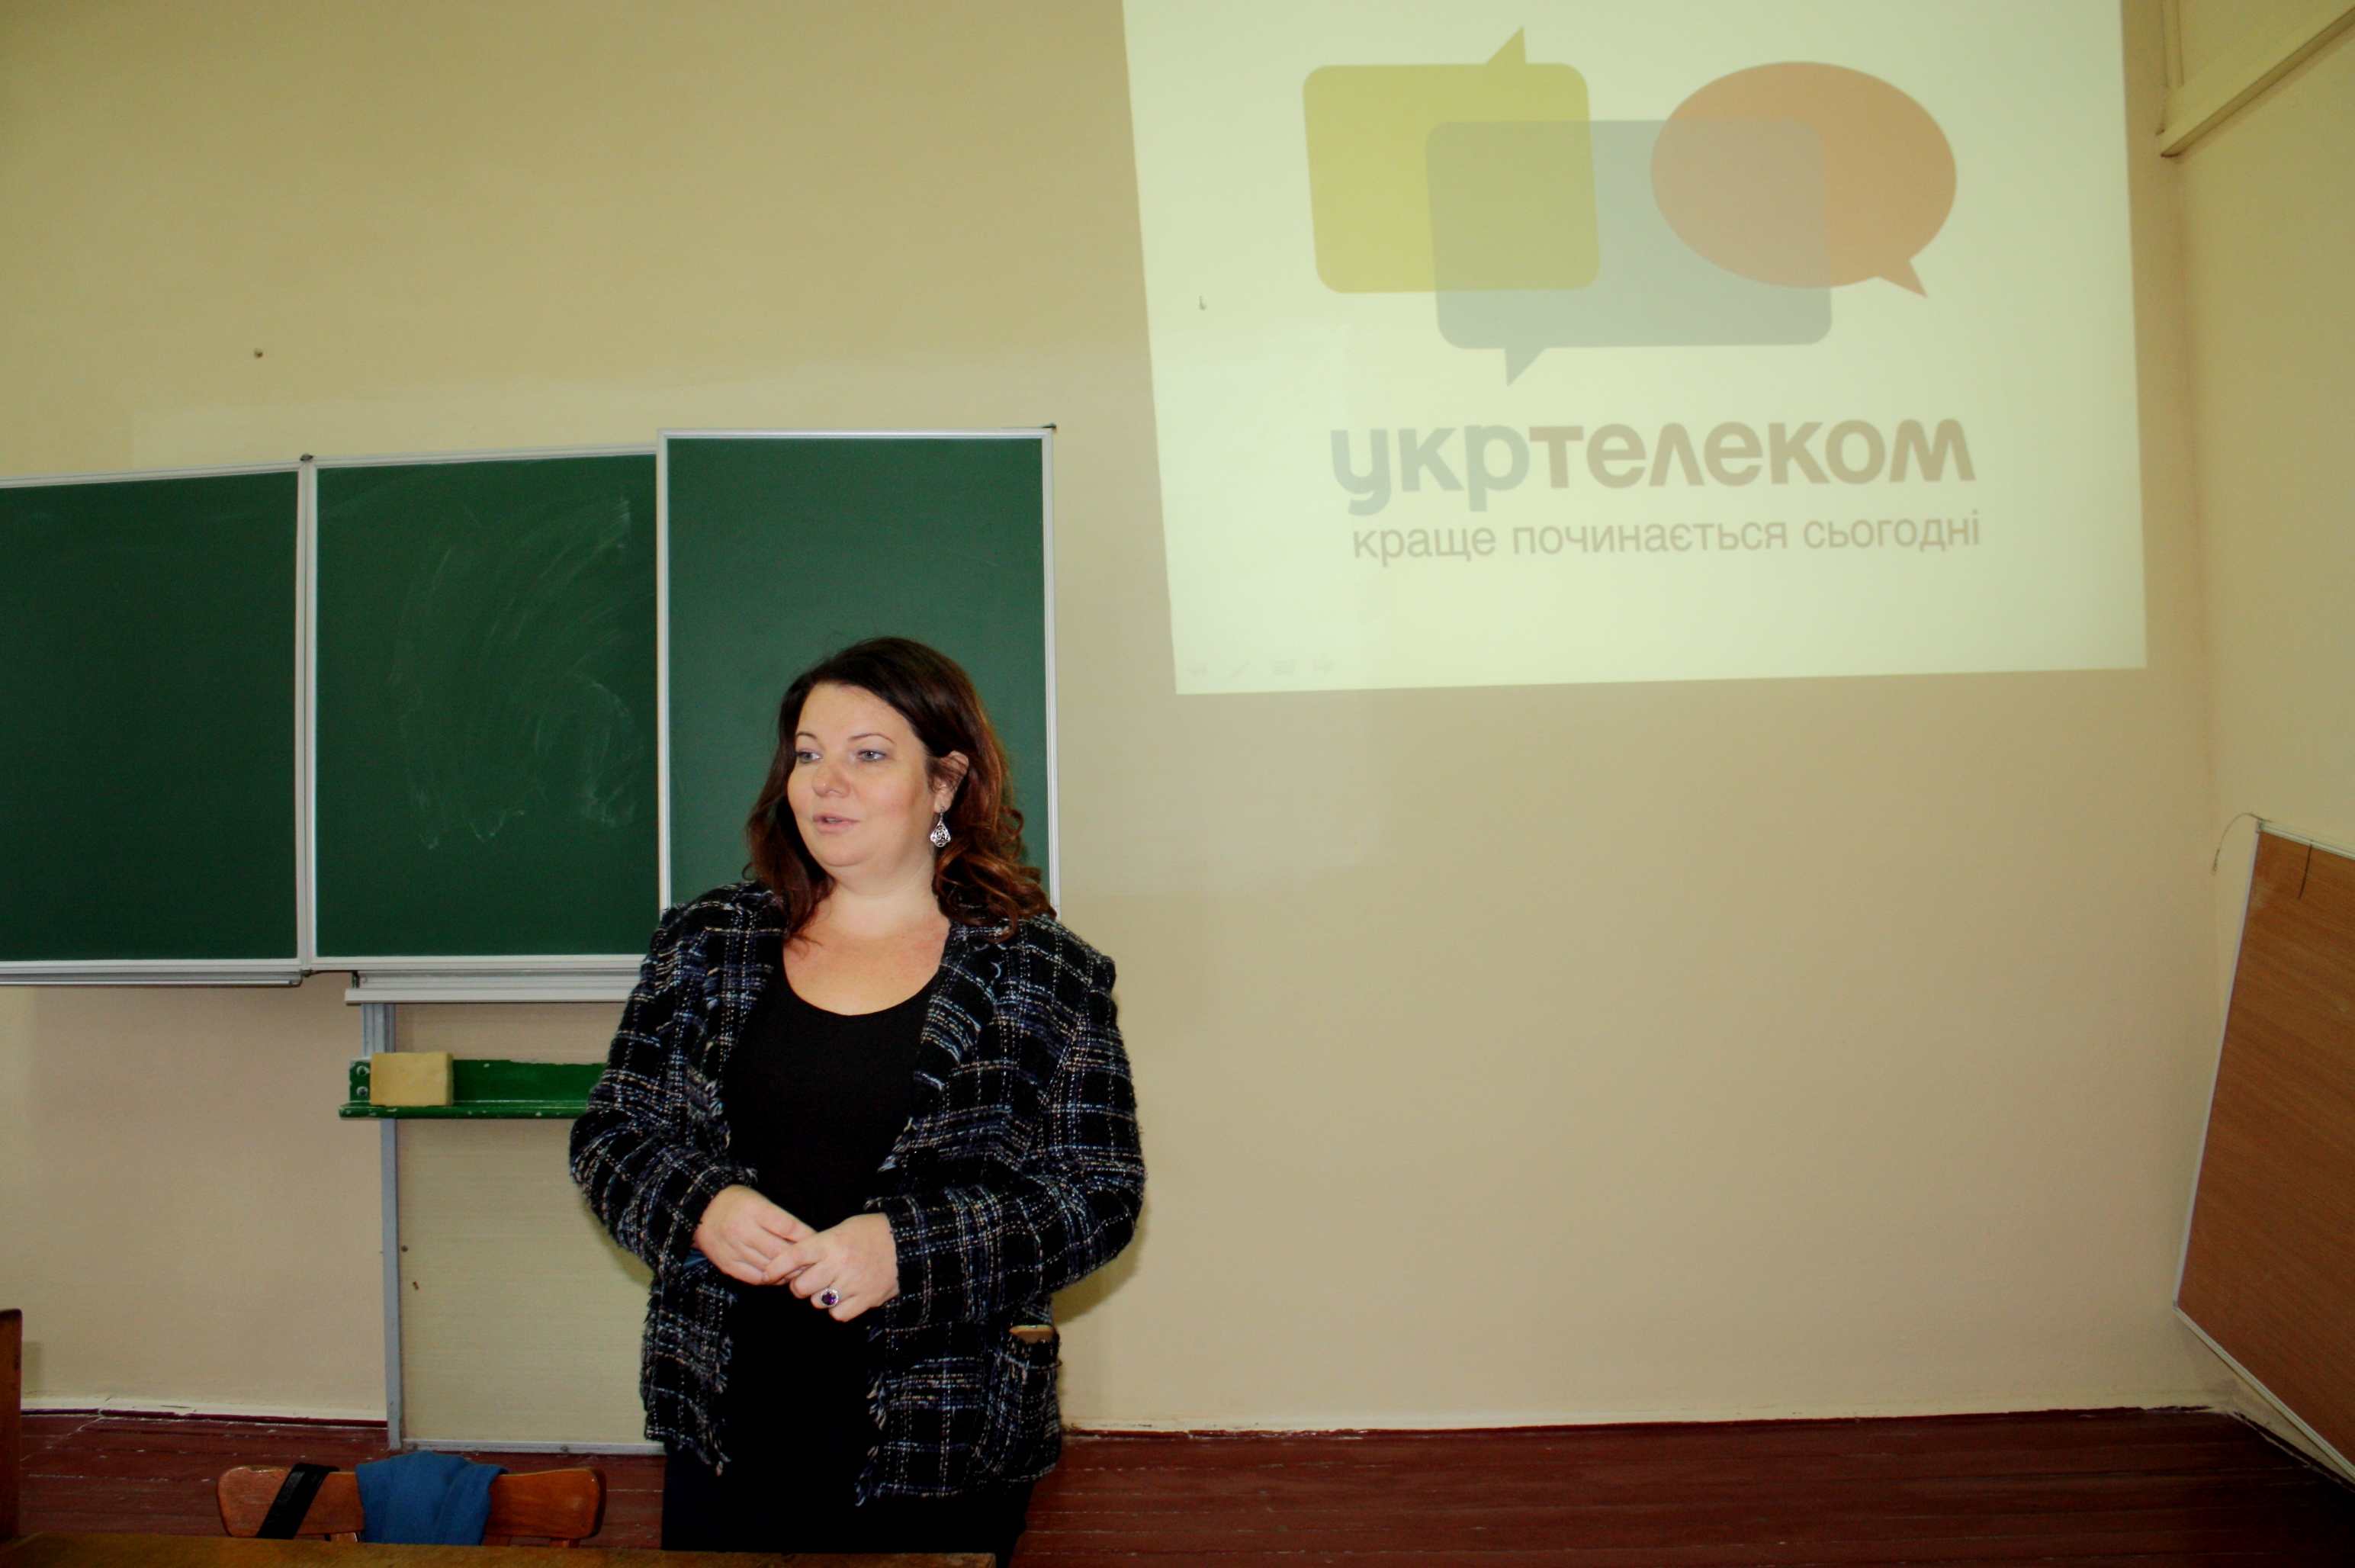 Зустріч із представниками Львівської філії ПАТ «Укртелеком»